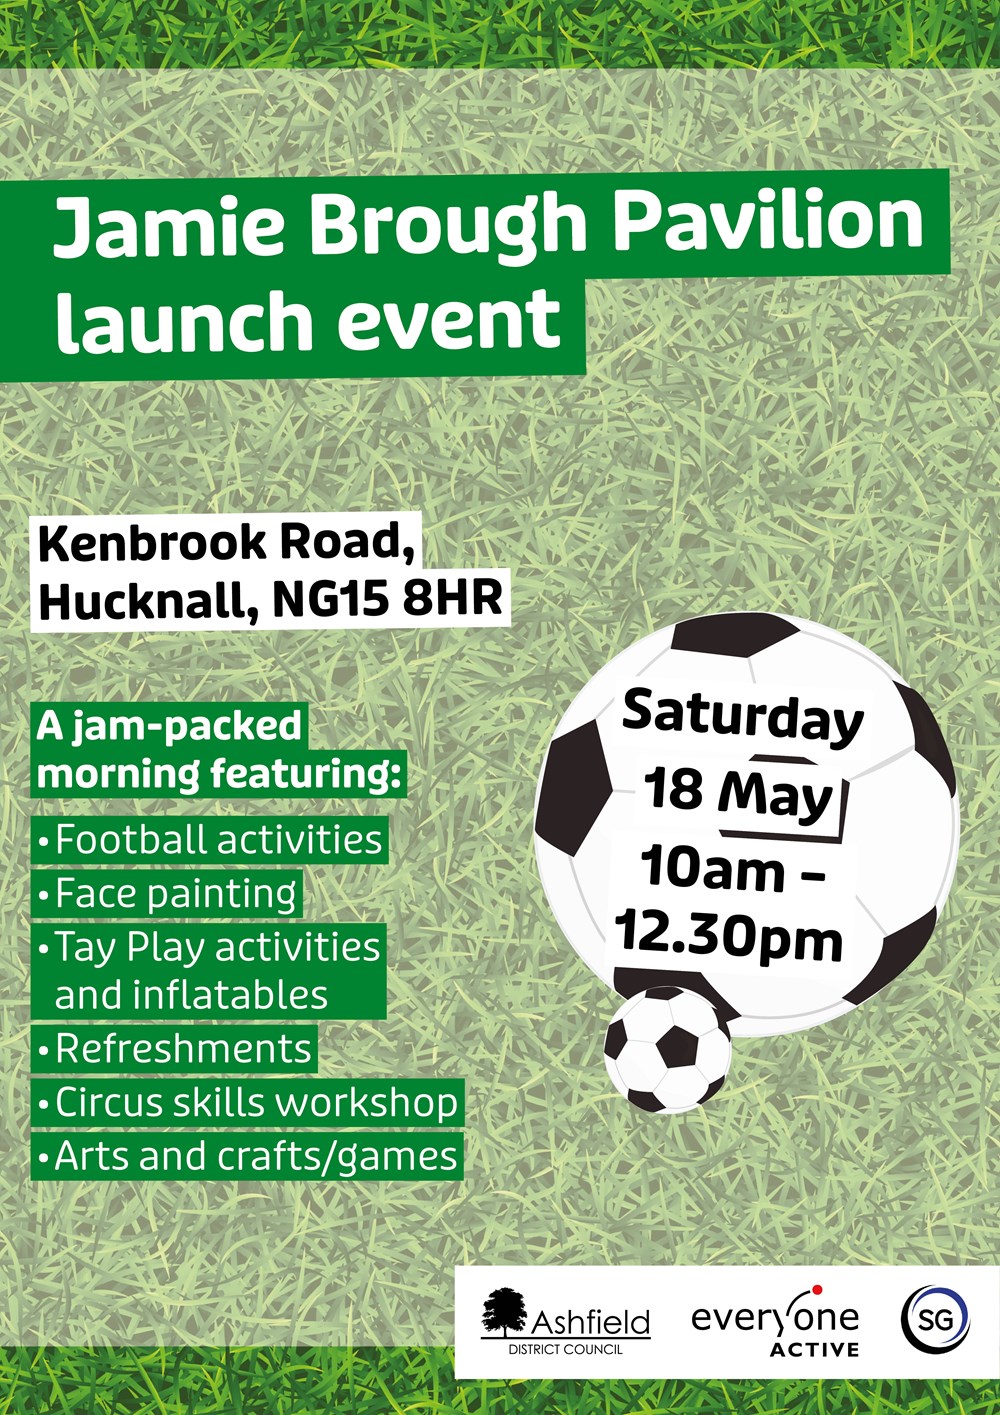 Jamie Brough Pavilion launch event Saturday 18 May 10am - 12.30pm